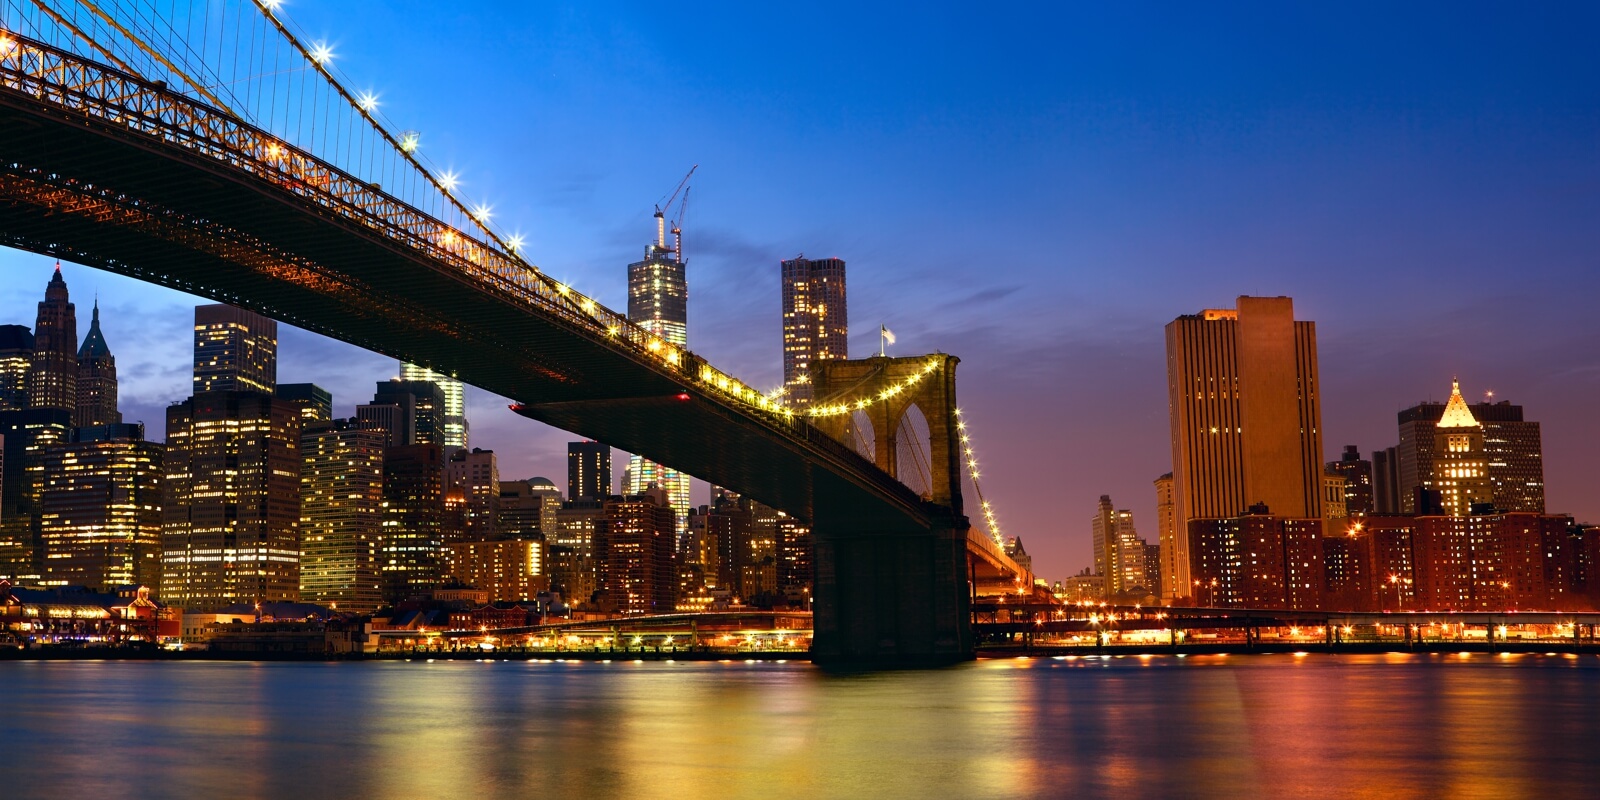 Vlies Tapete XXL Poster Fototapete Brooklyn Bridge Manhattan